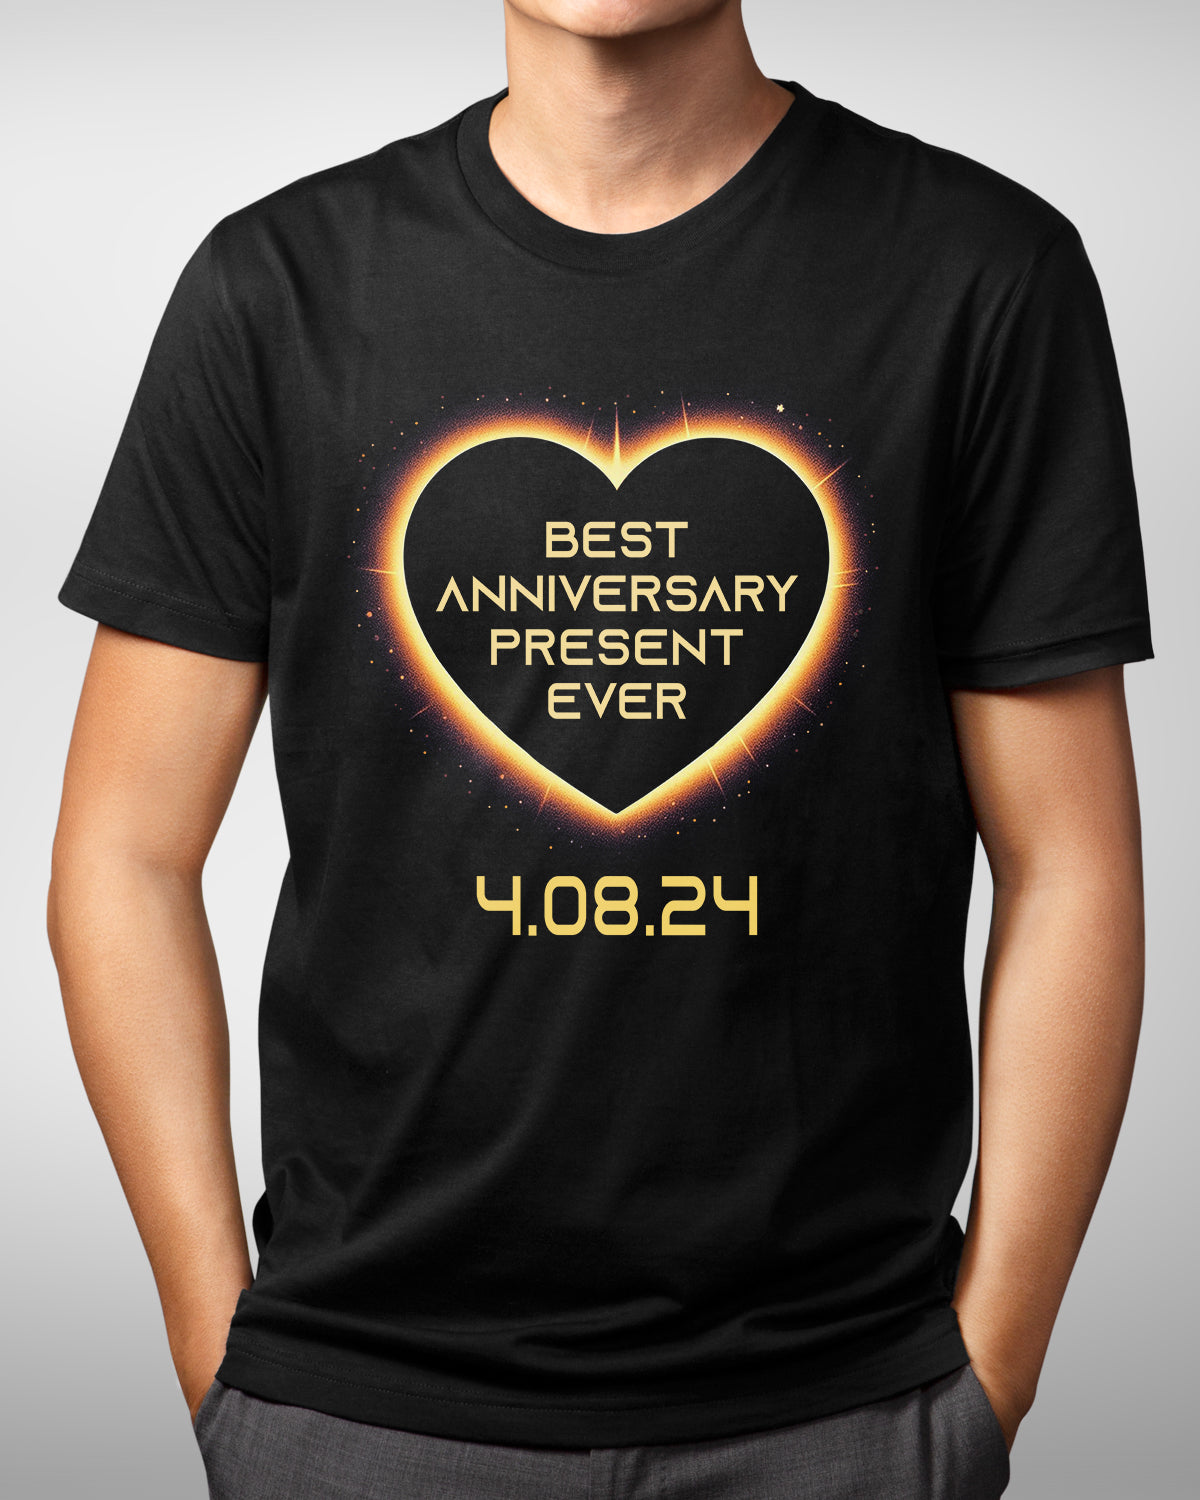 04.08.24 Wedding Anniversary Tee - Solar Eclipse April 8 2024 Shirt, Romantic Valentine's Day Gift, Memorable Date Celebration Top